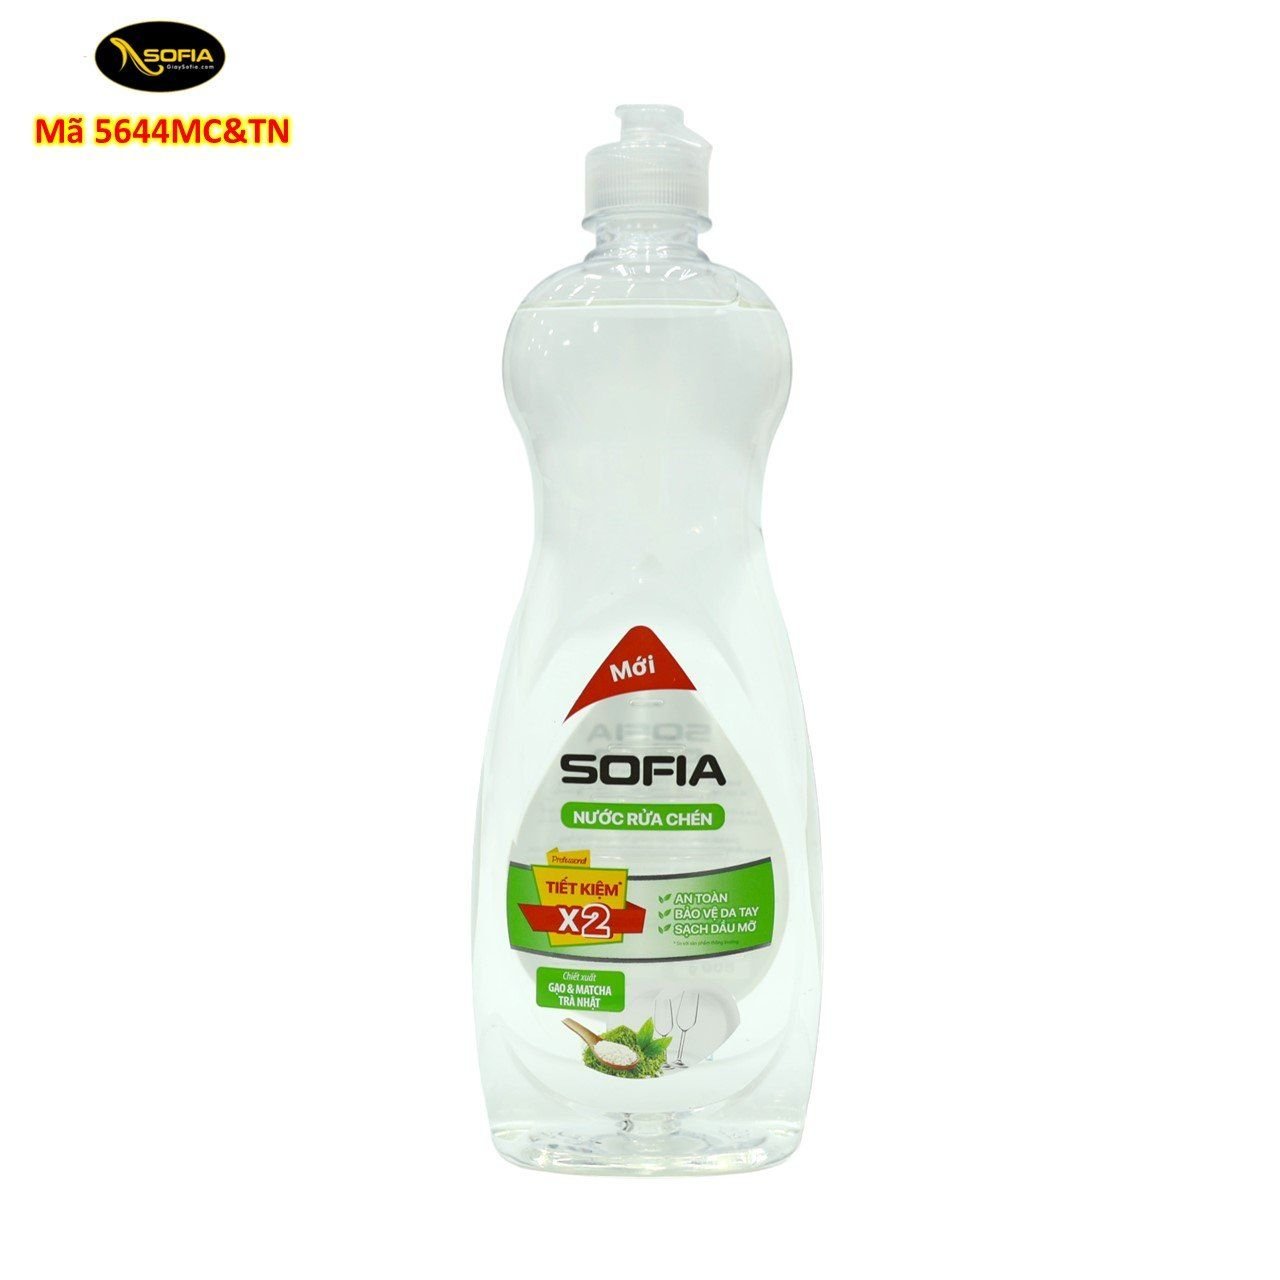  Nước rửa chén SOFIA 5644 